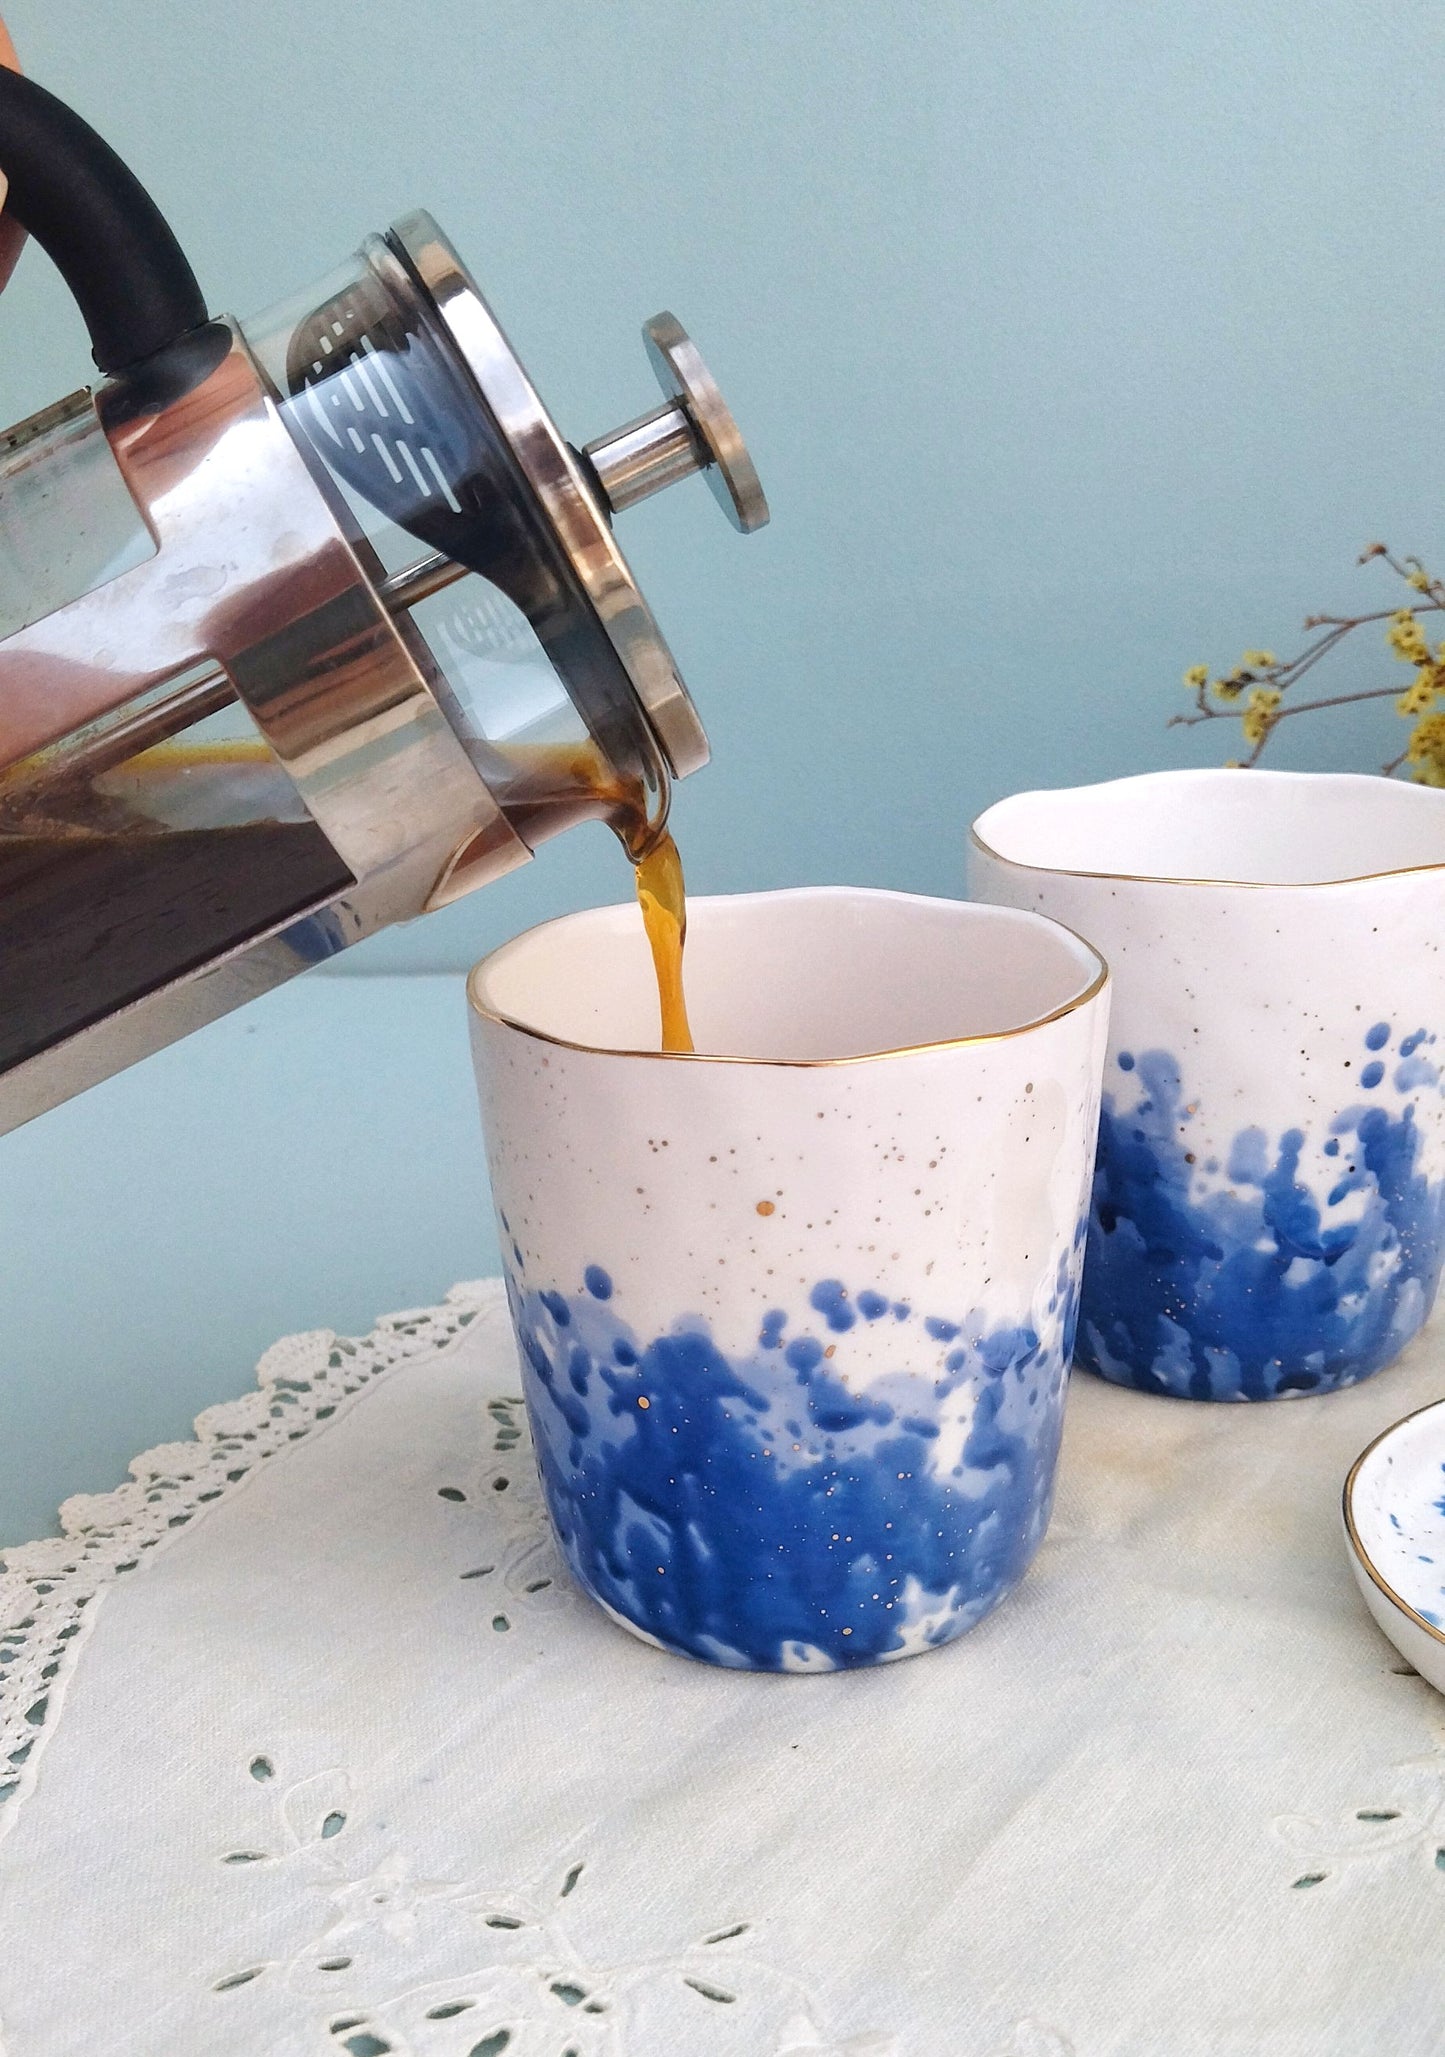 Gold Ceramic Rimmed Cups, White Porcelain Cup With Cobalt Splashes, Set Of 4